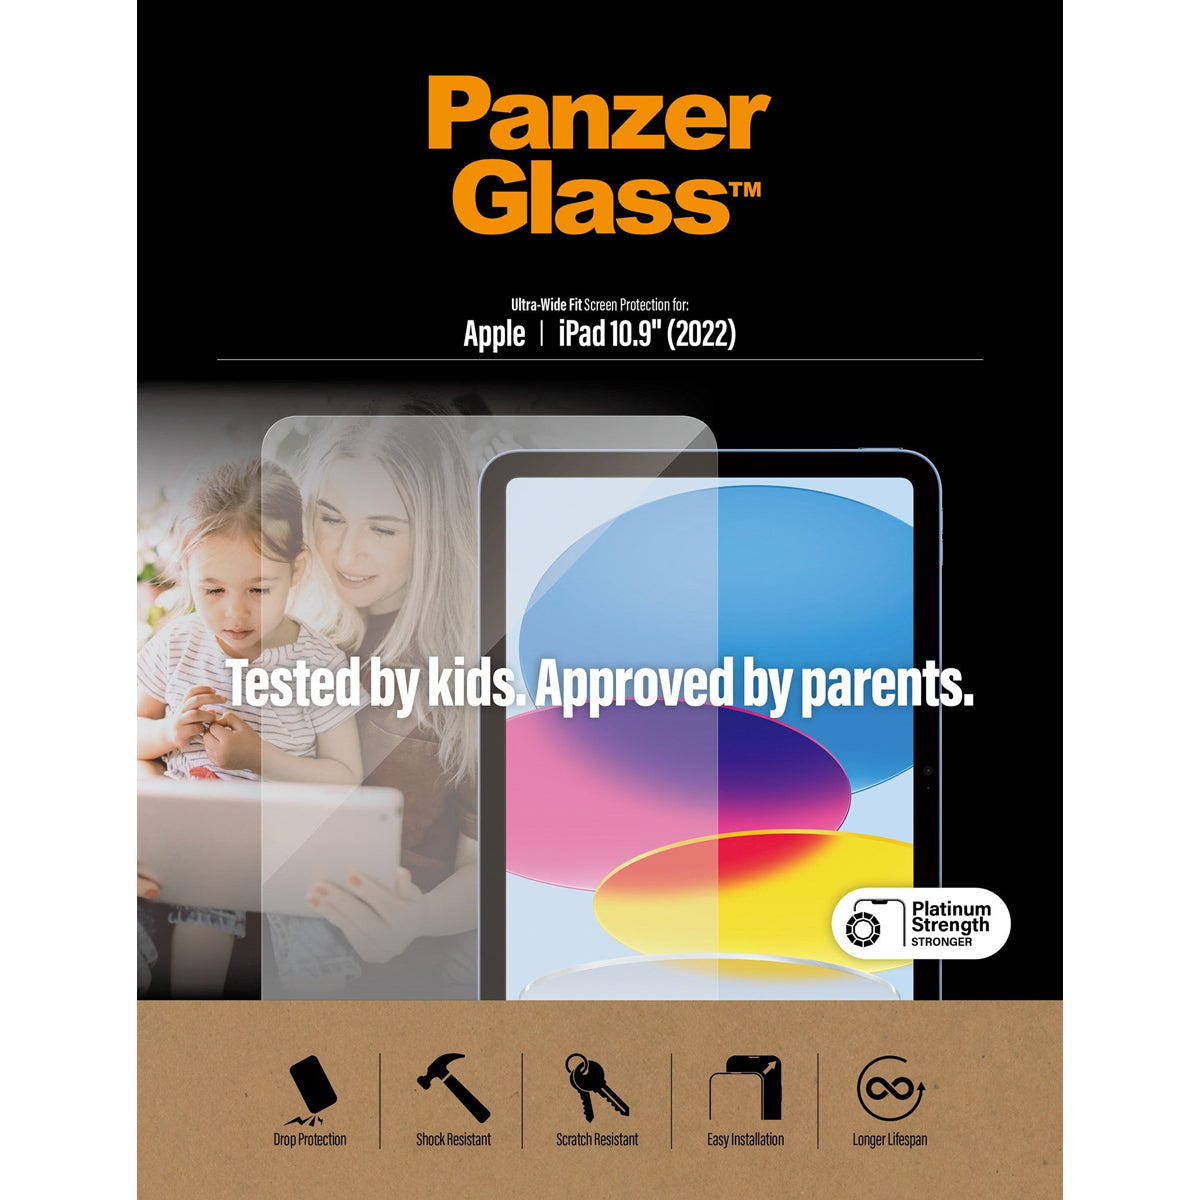 PanzerGlass Ultra-Wide Fit Screen Protector for iPad 10.9 Gen 10 - Transparent.